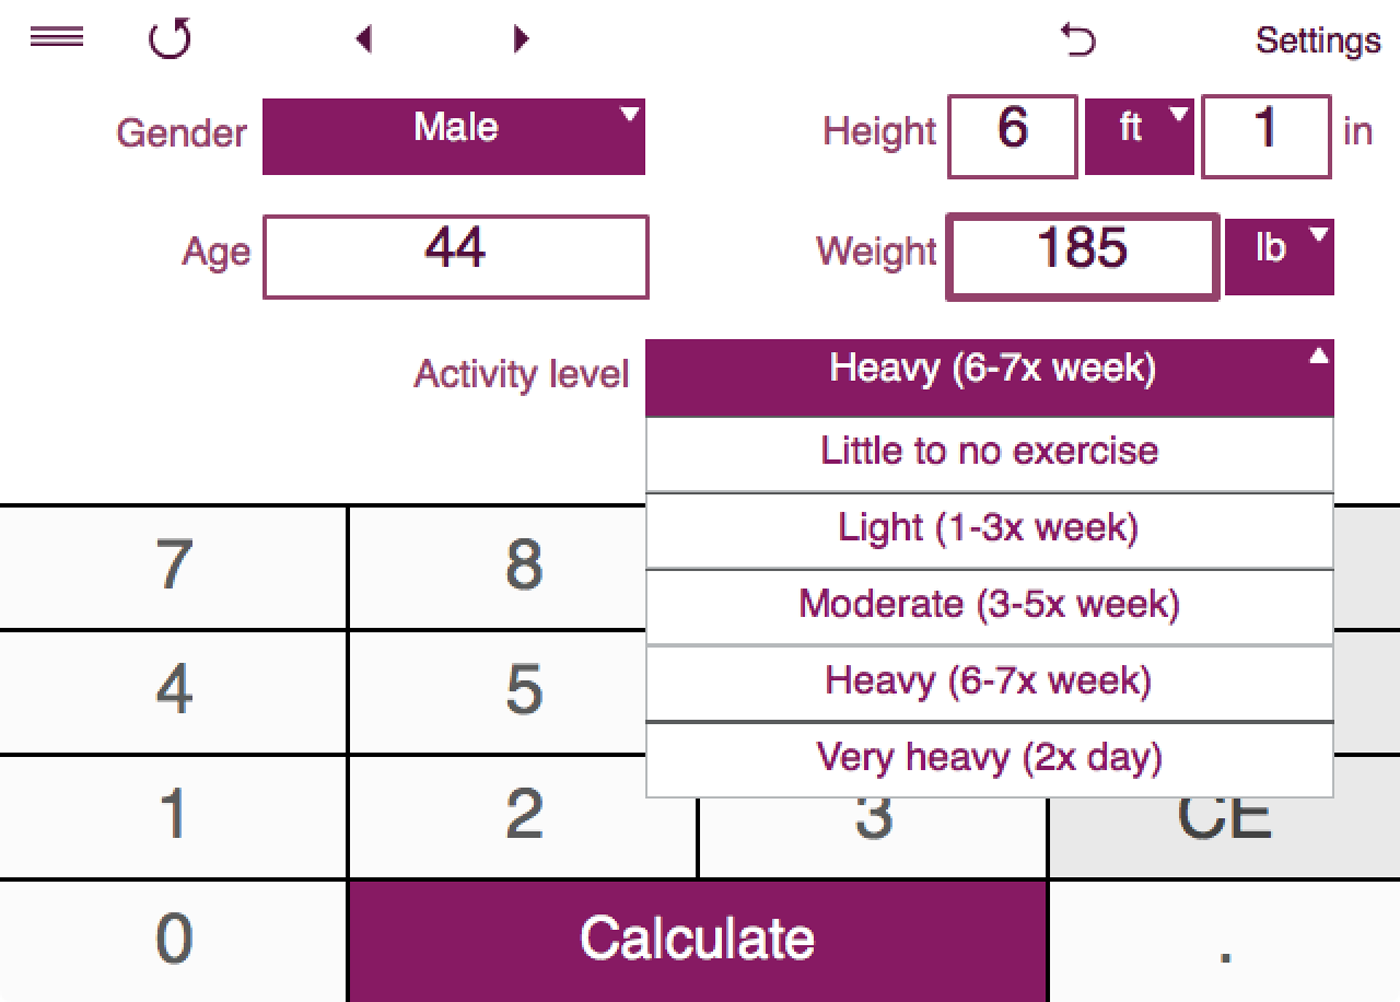 TDEE + BMR + BMI Calculator